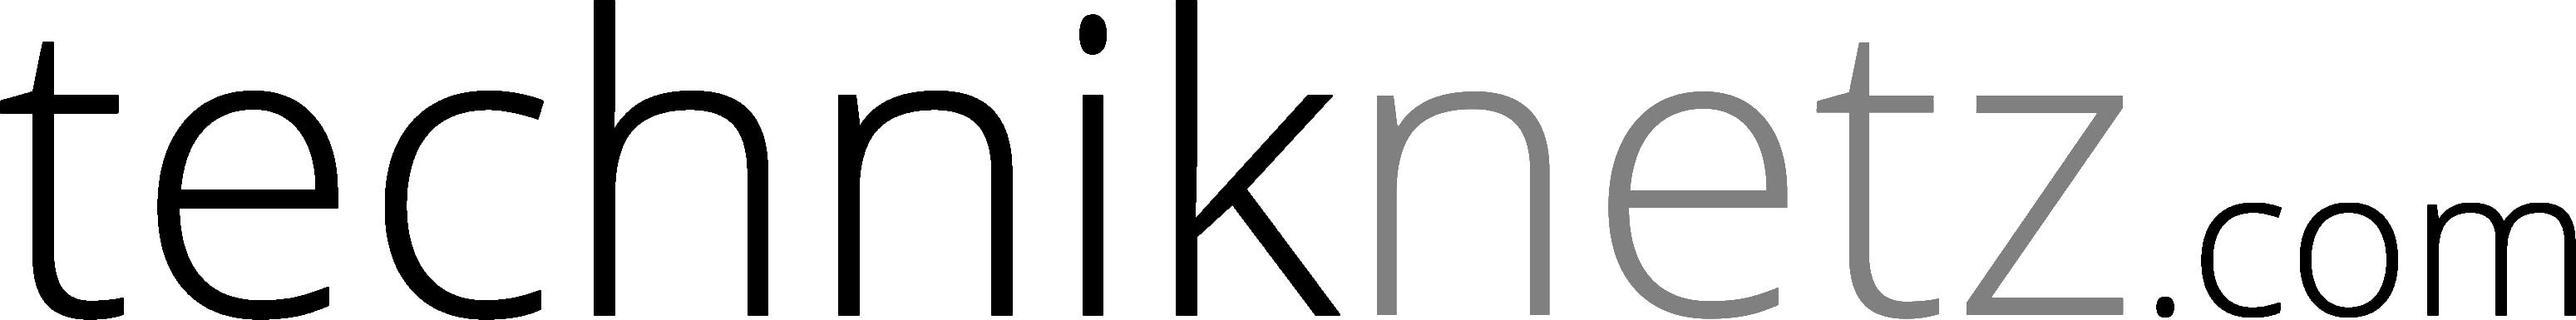 TECHNIKNETZ_Logo